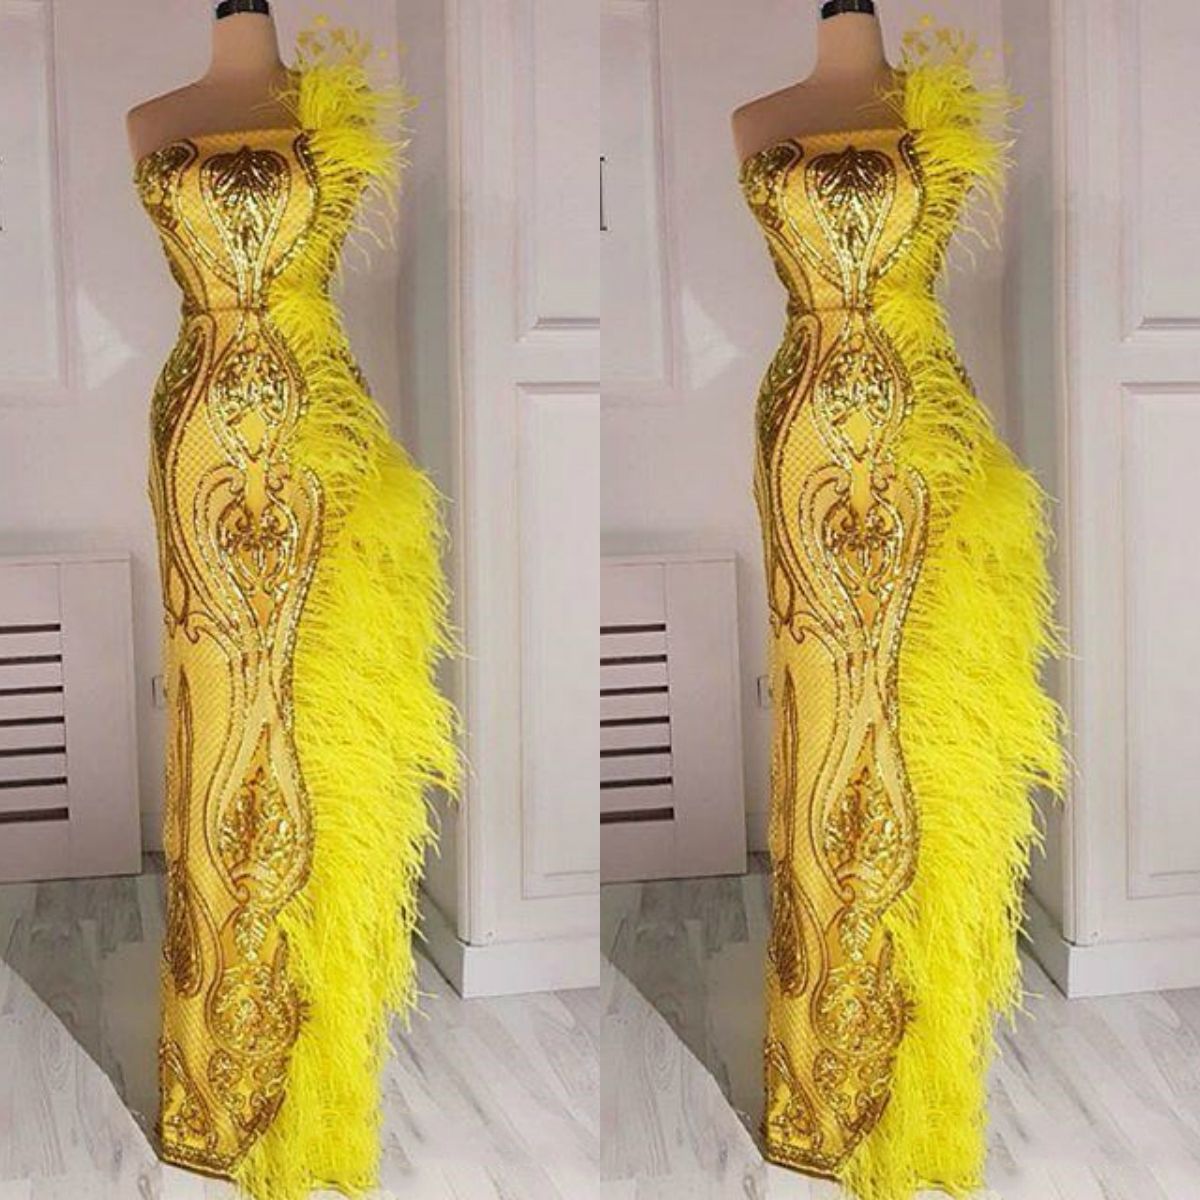 glamorous yellow dress